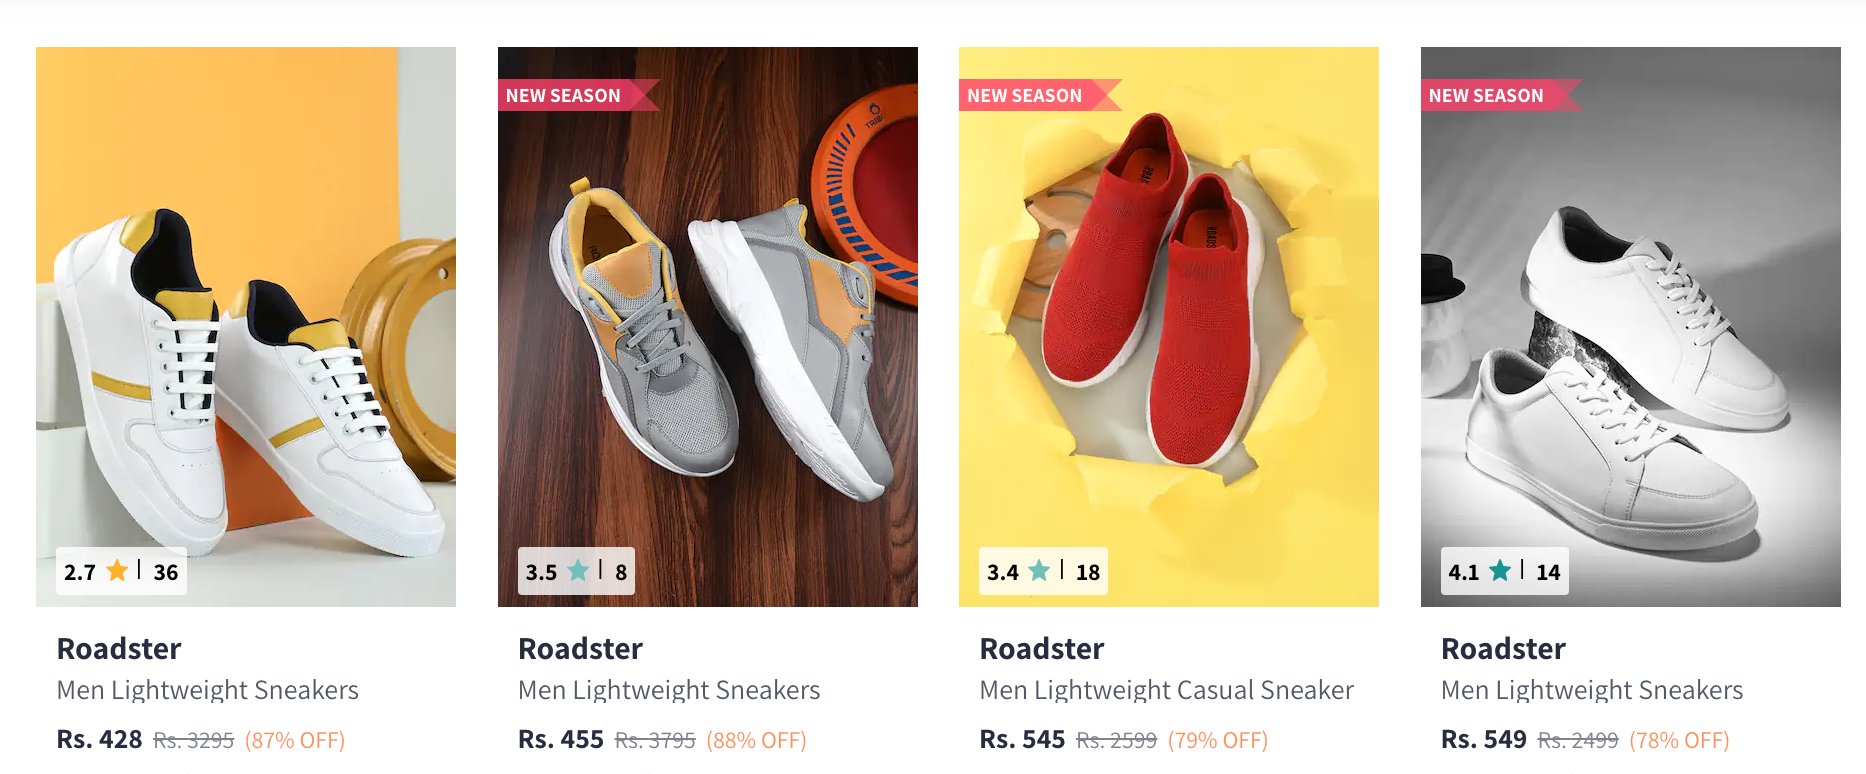 Where can I buy duplicate Nike shoes? - Quora